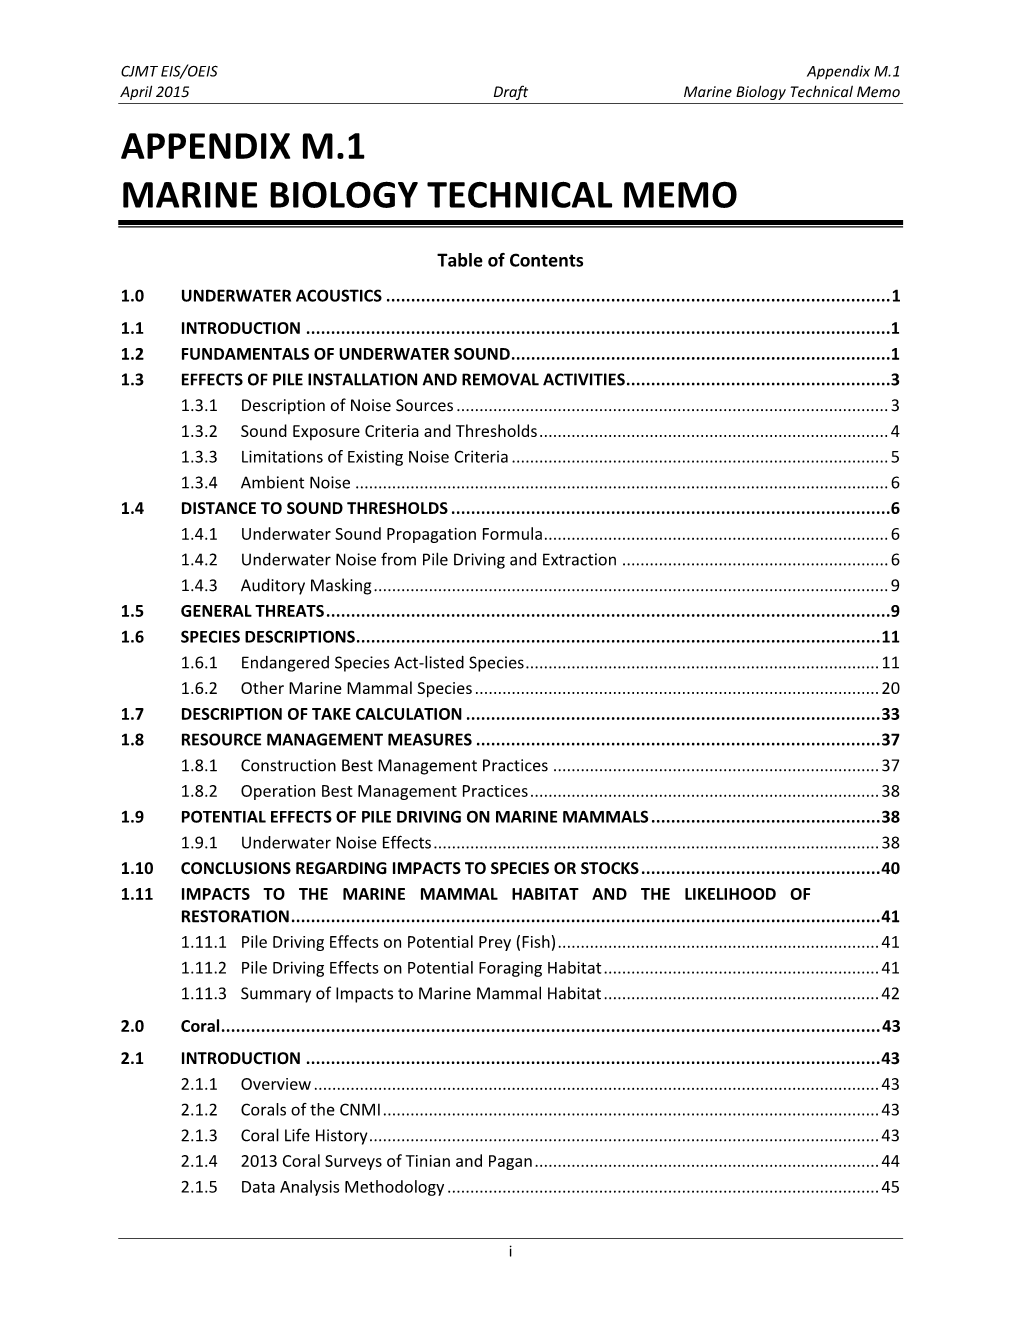 Tech Memo Marine Biology